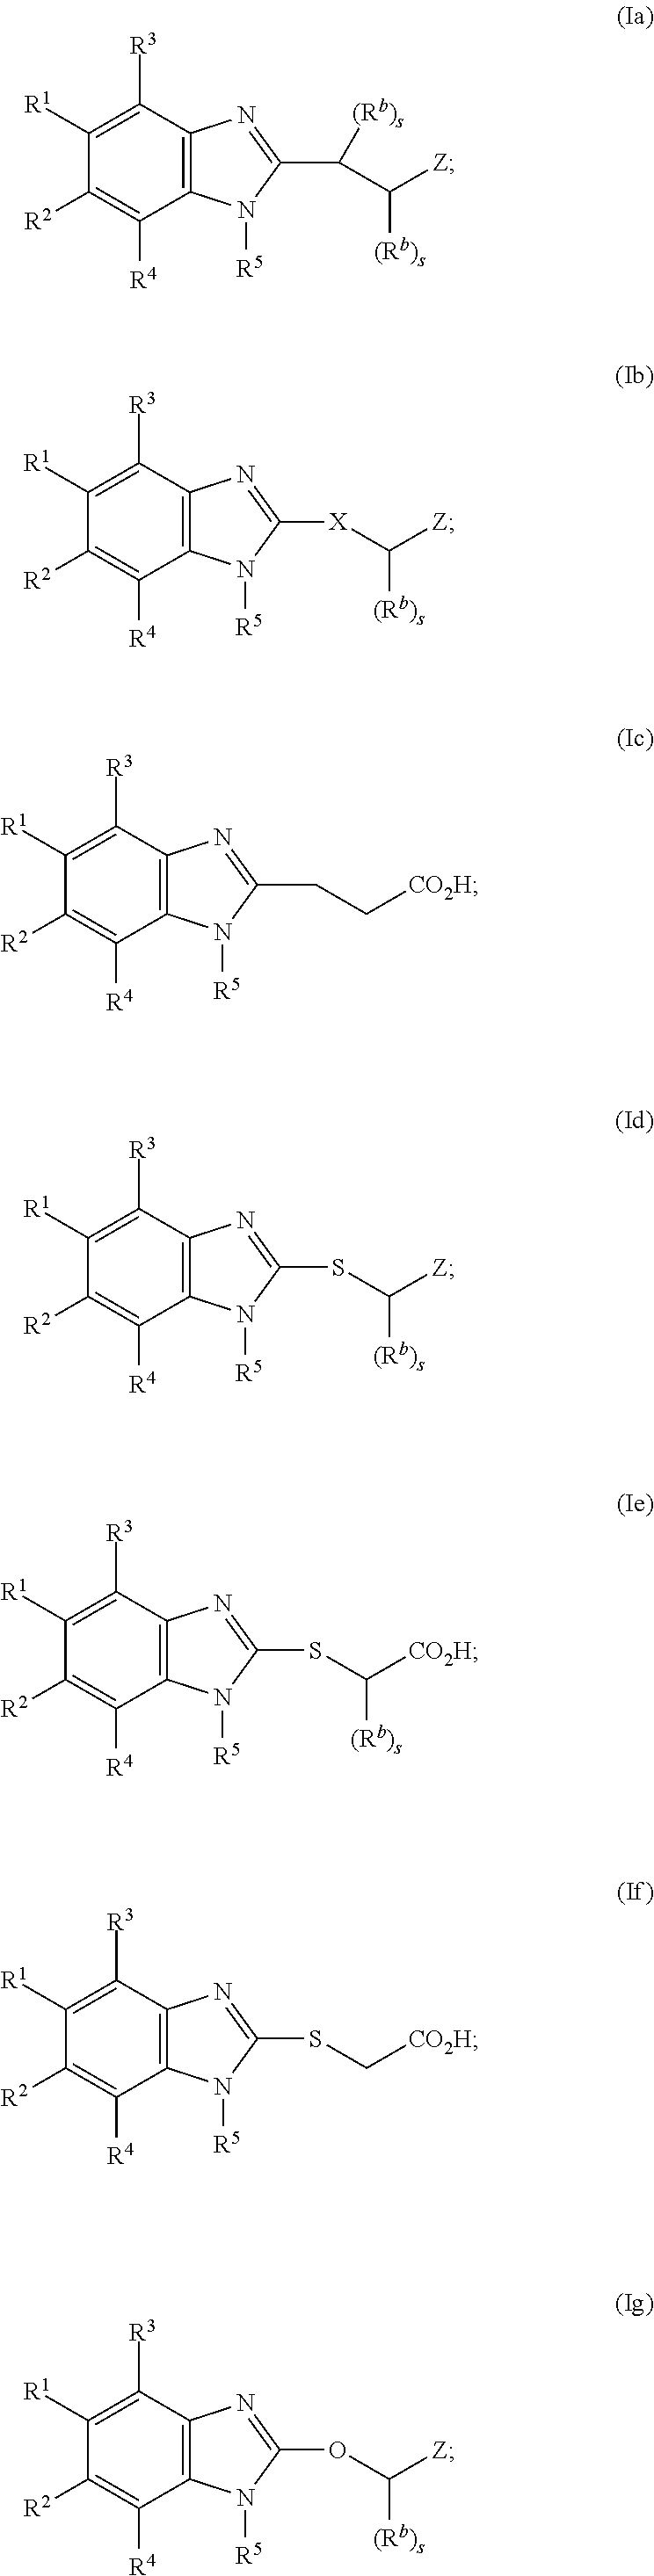 Cyclic benzimidazole derivatives useful as anti-diabetic agents